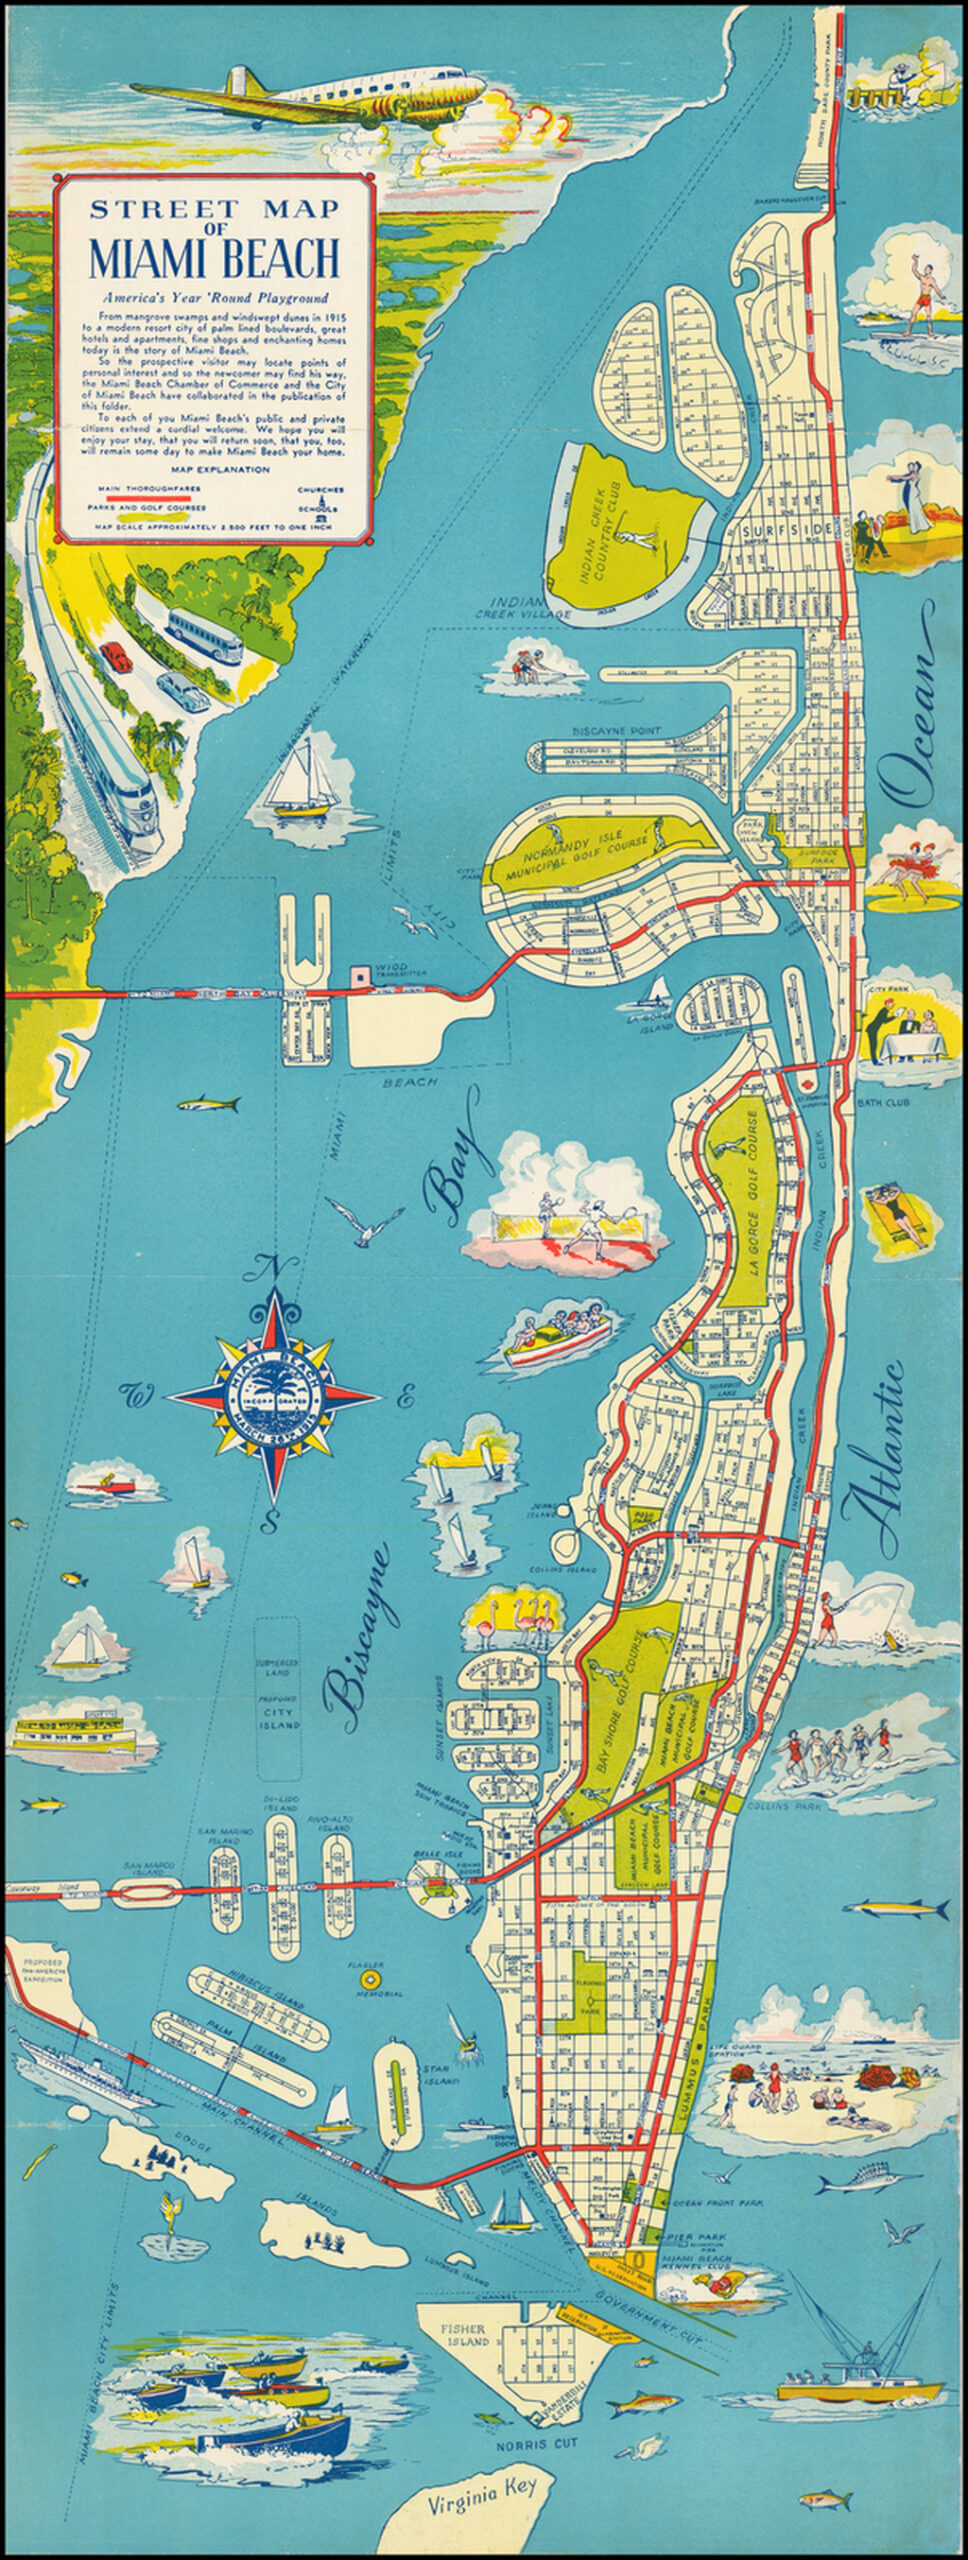 Street Map Of Miami Beach America s Year Round Playground Barry 